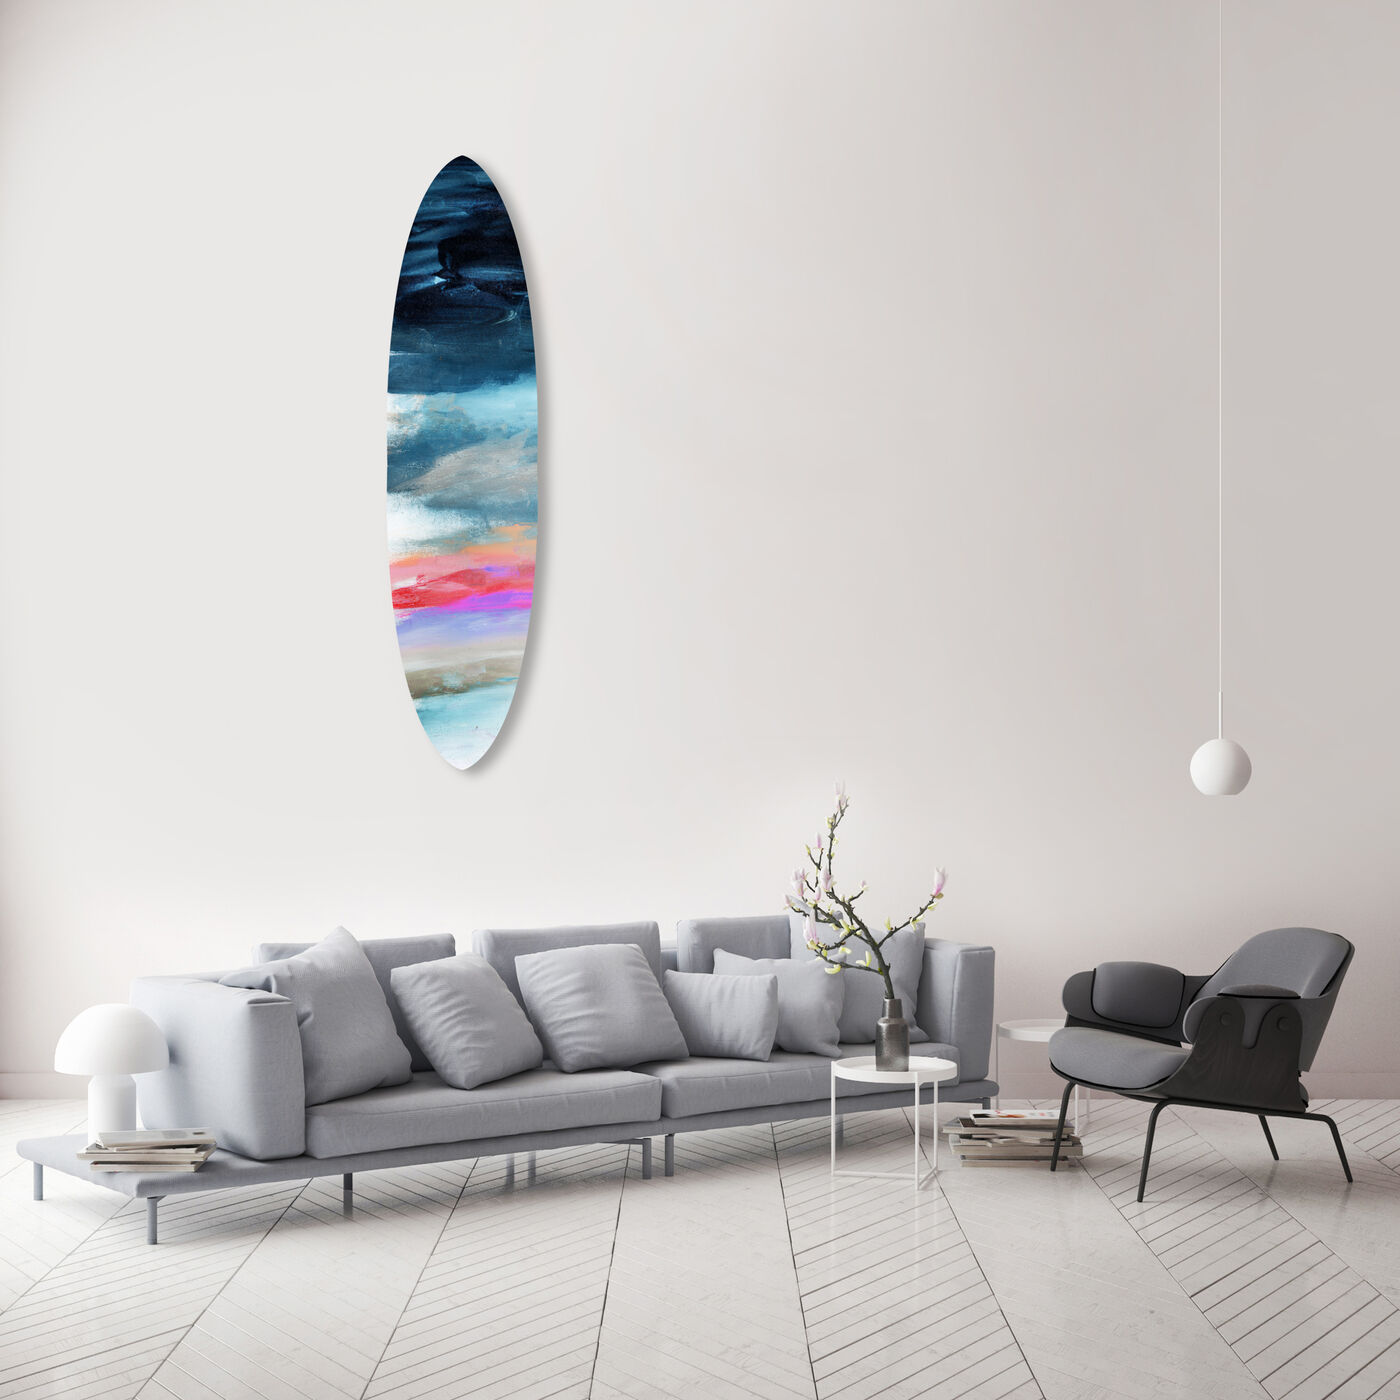 Parque del Retiro - Decorative Acrylic Surfboard